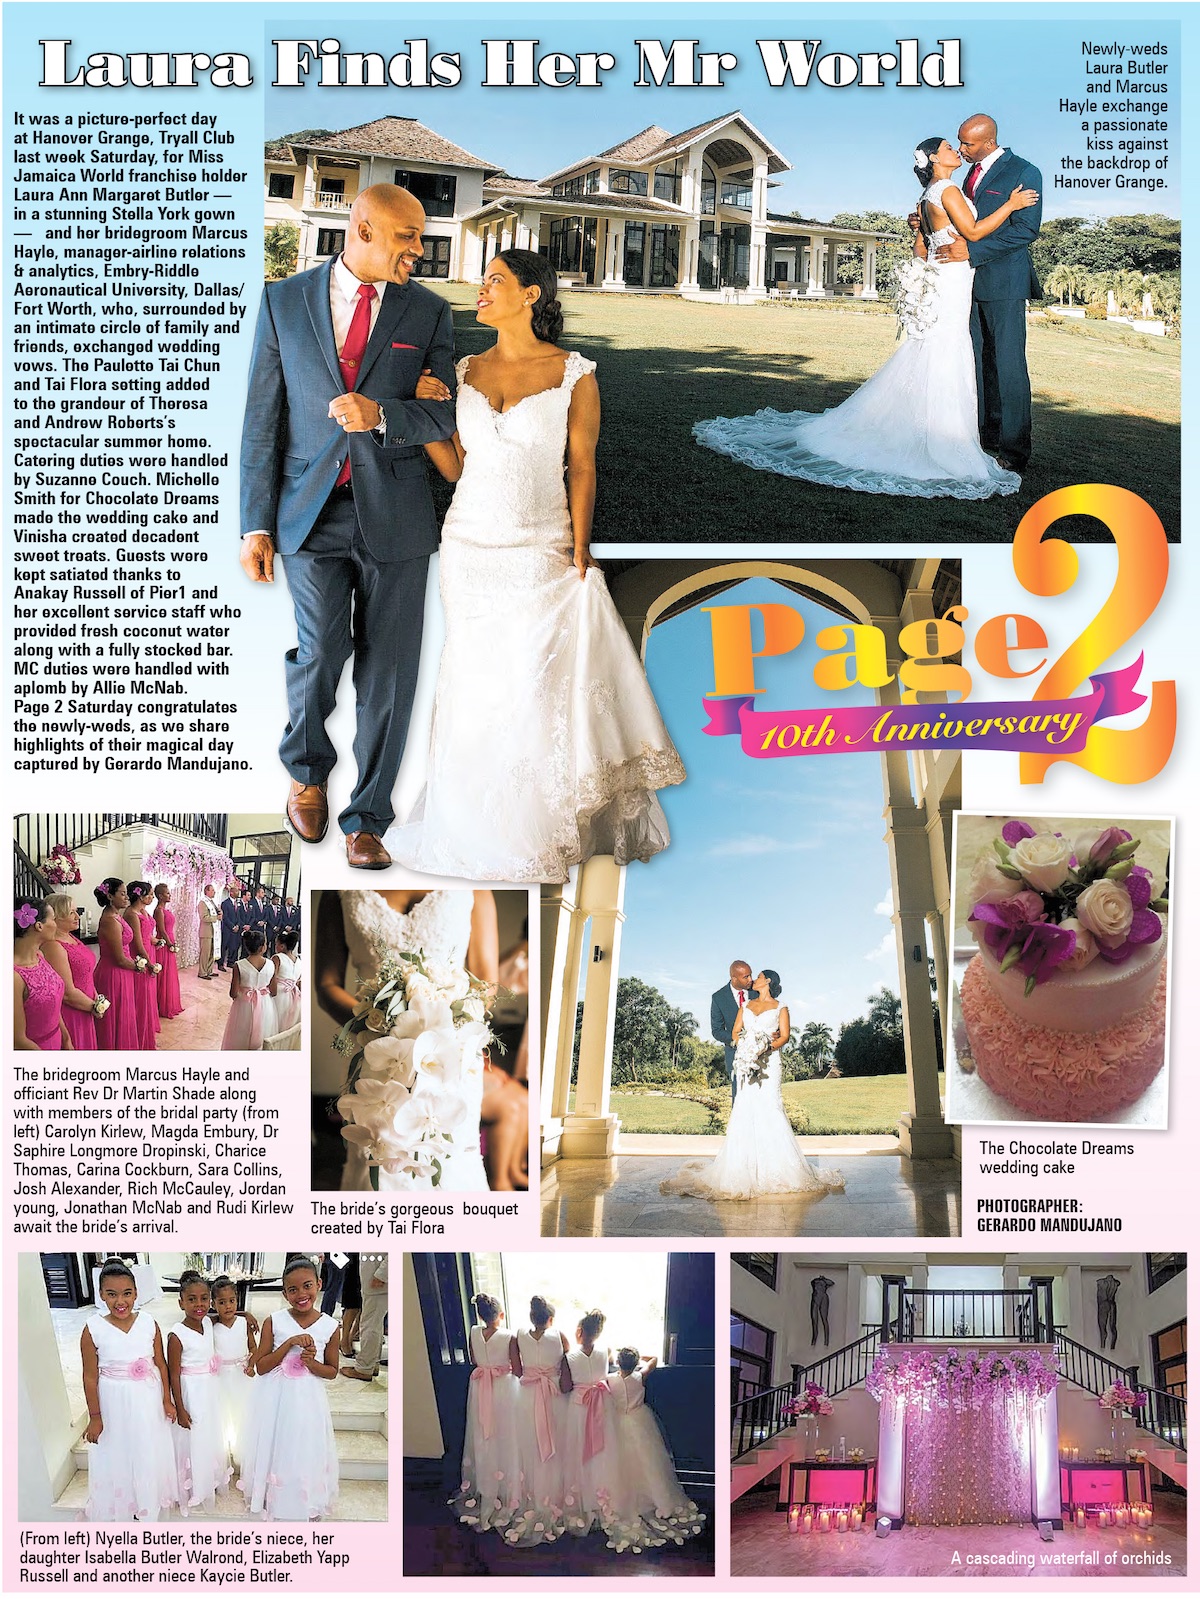 Tomorrow MAGAZINE - MISS JAMAICA WORLD Laura finds her Mr World - Hanover-Grange, Jamaica Wedding, Page2 Sept17 2016